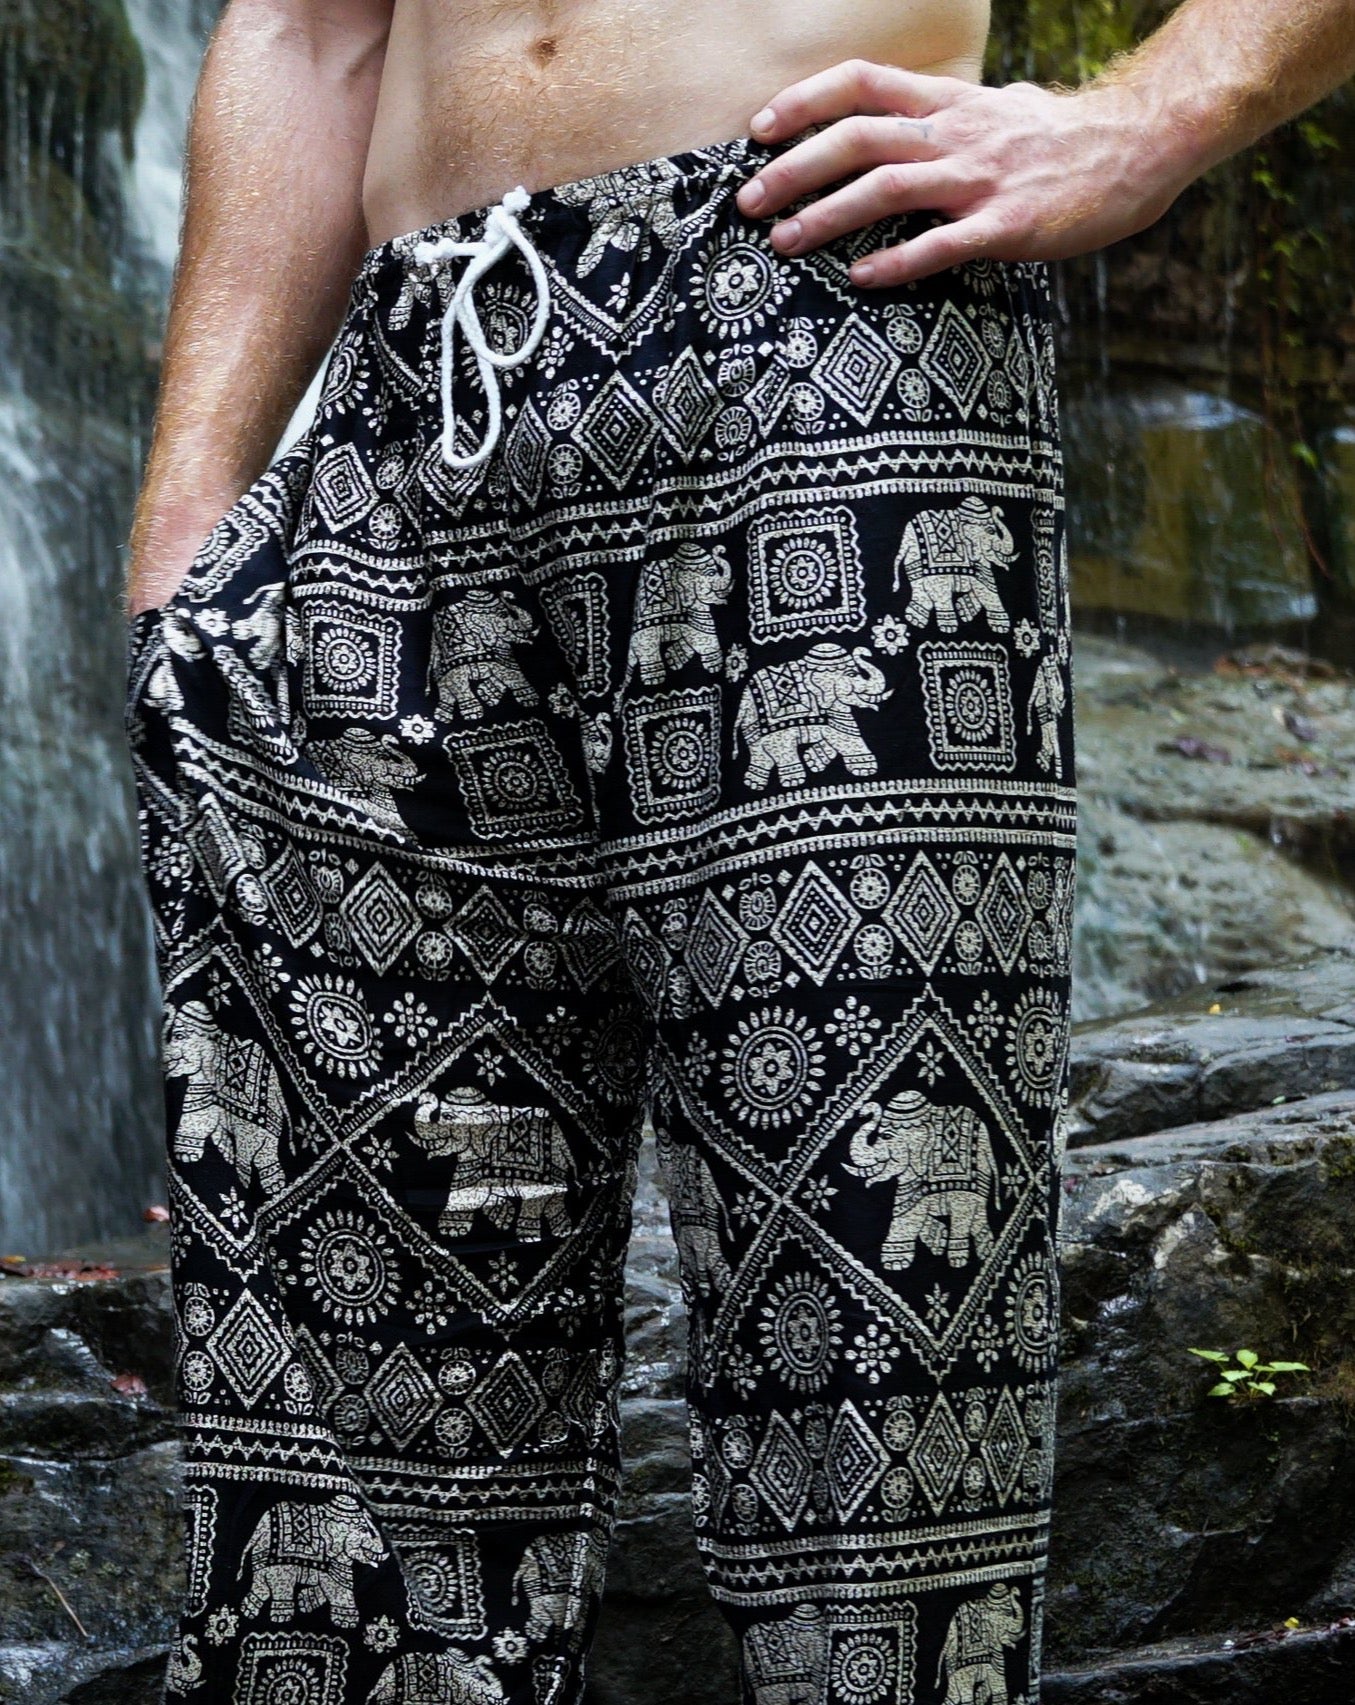 Thai Elephant Shorts 